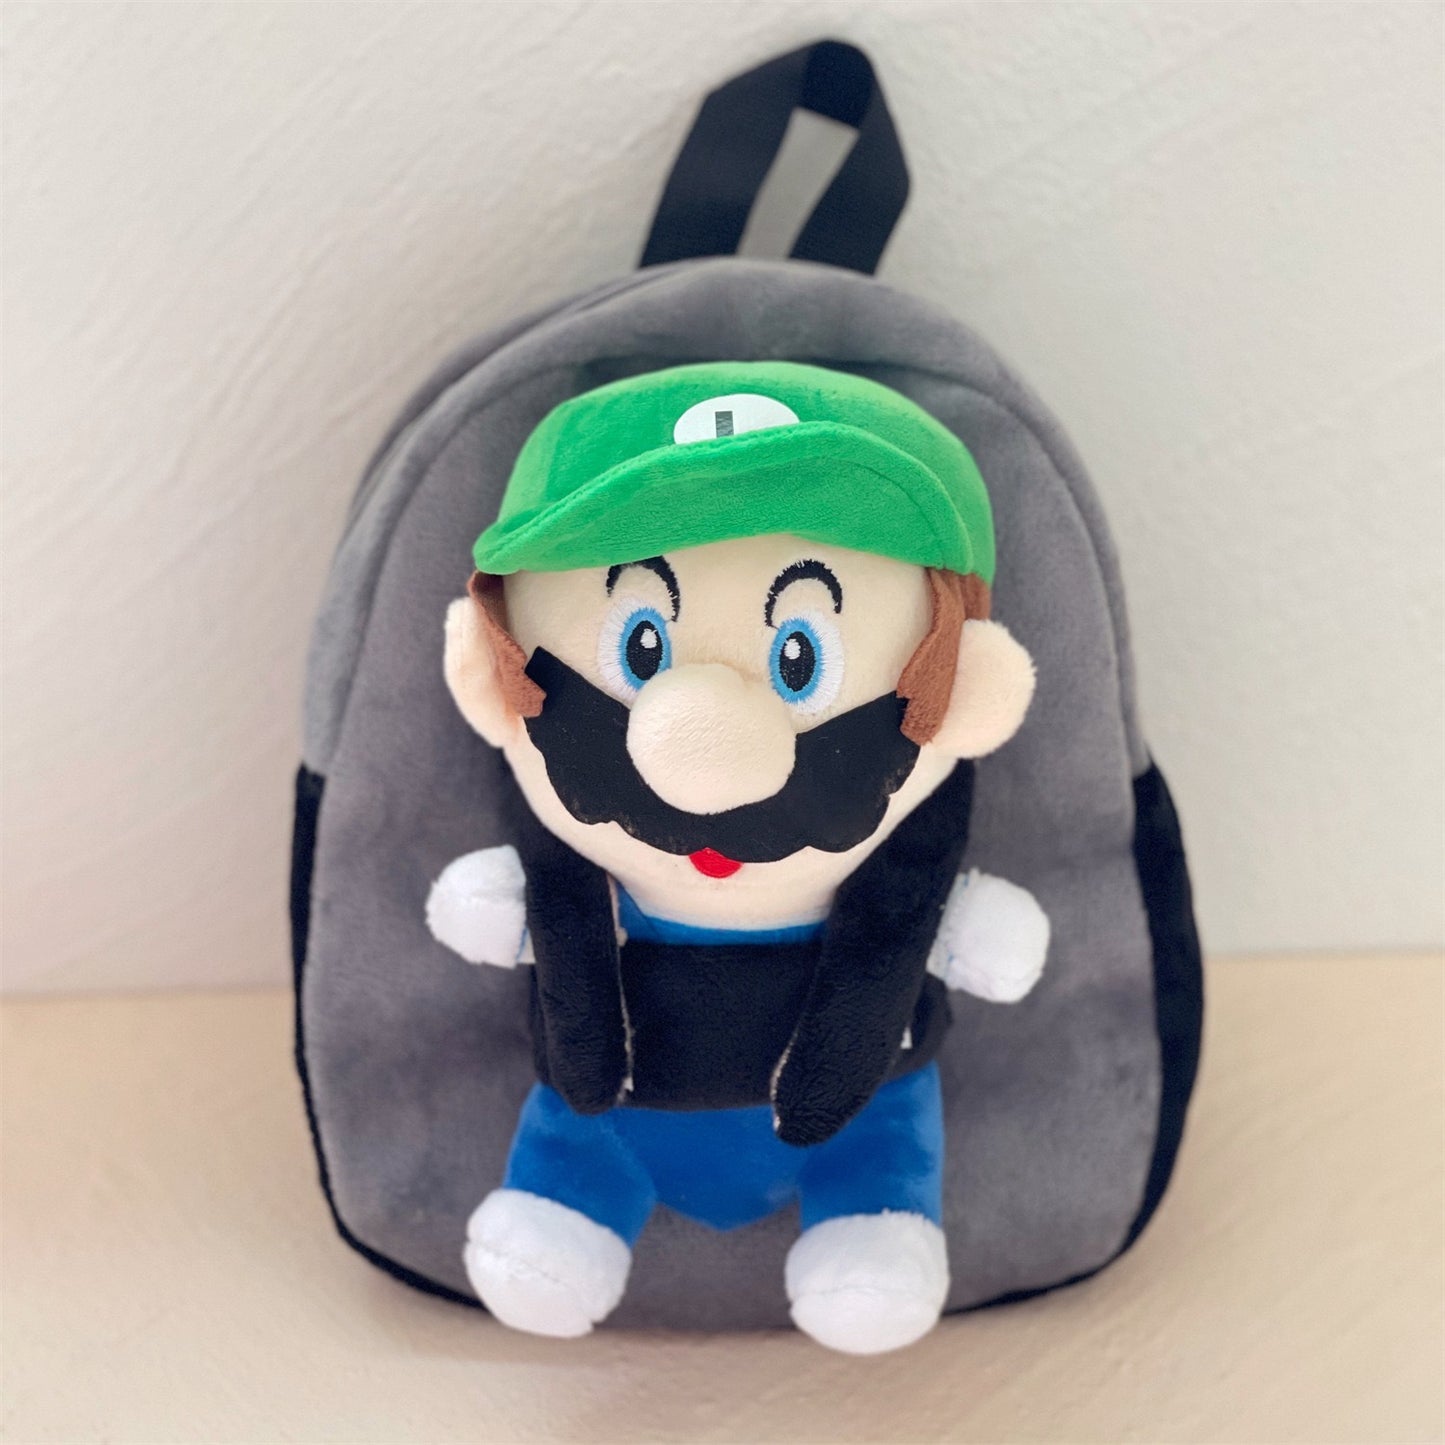 Detachable Mario soft plush backpack